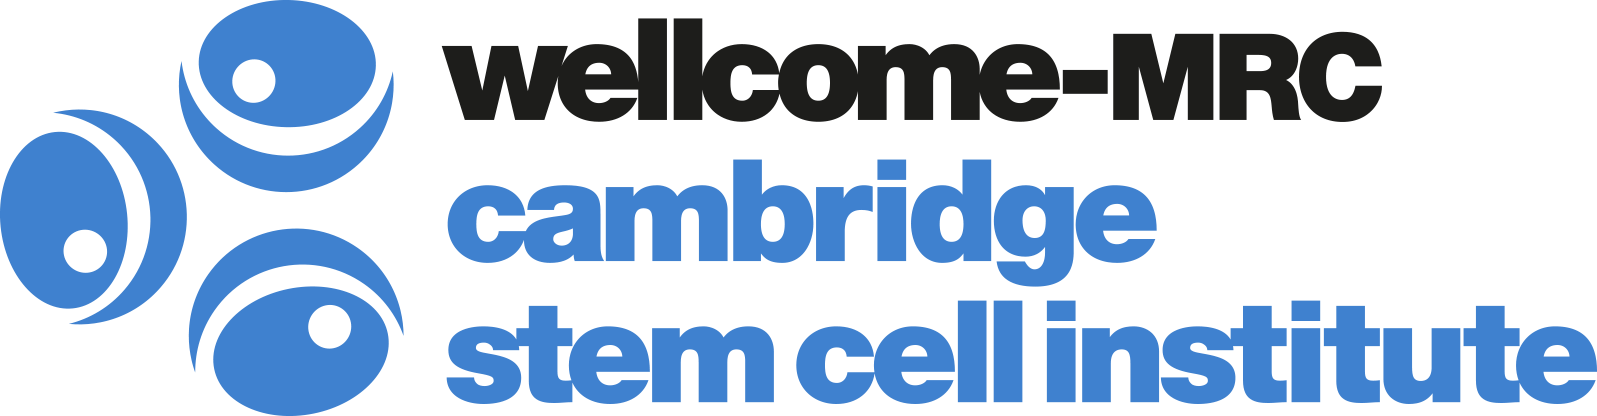 Wellcome-MRC Cambridge Stem Cell Institute logo